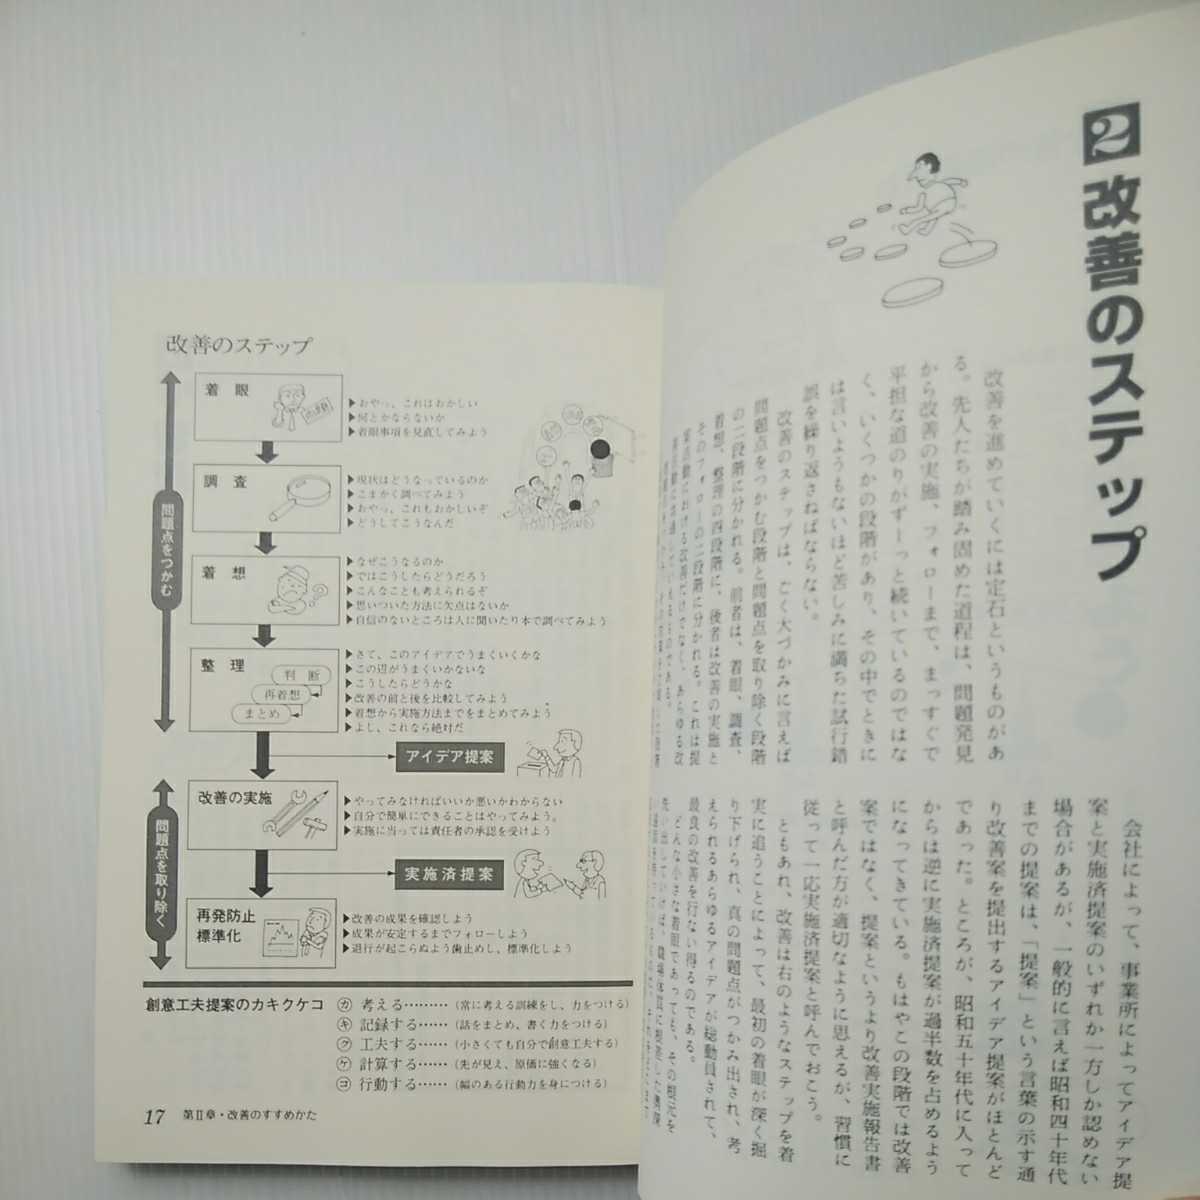 zaa-433♪改善提案ハンドブック (1983年) － 古書, 1983/1/1 日本HR協会 (著)近代経営社